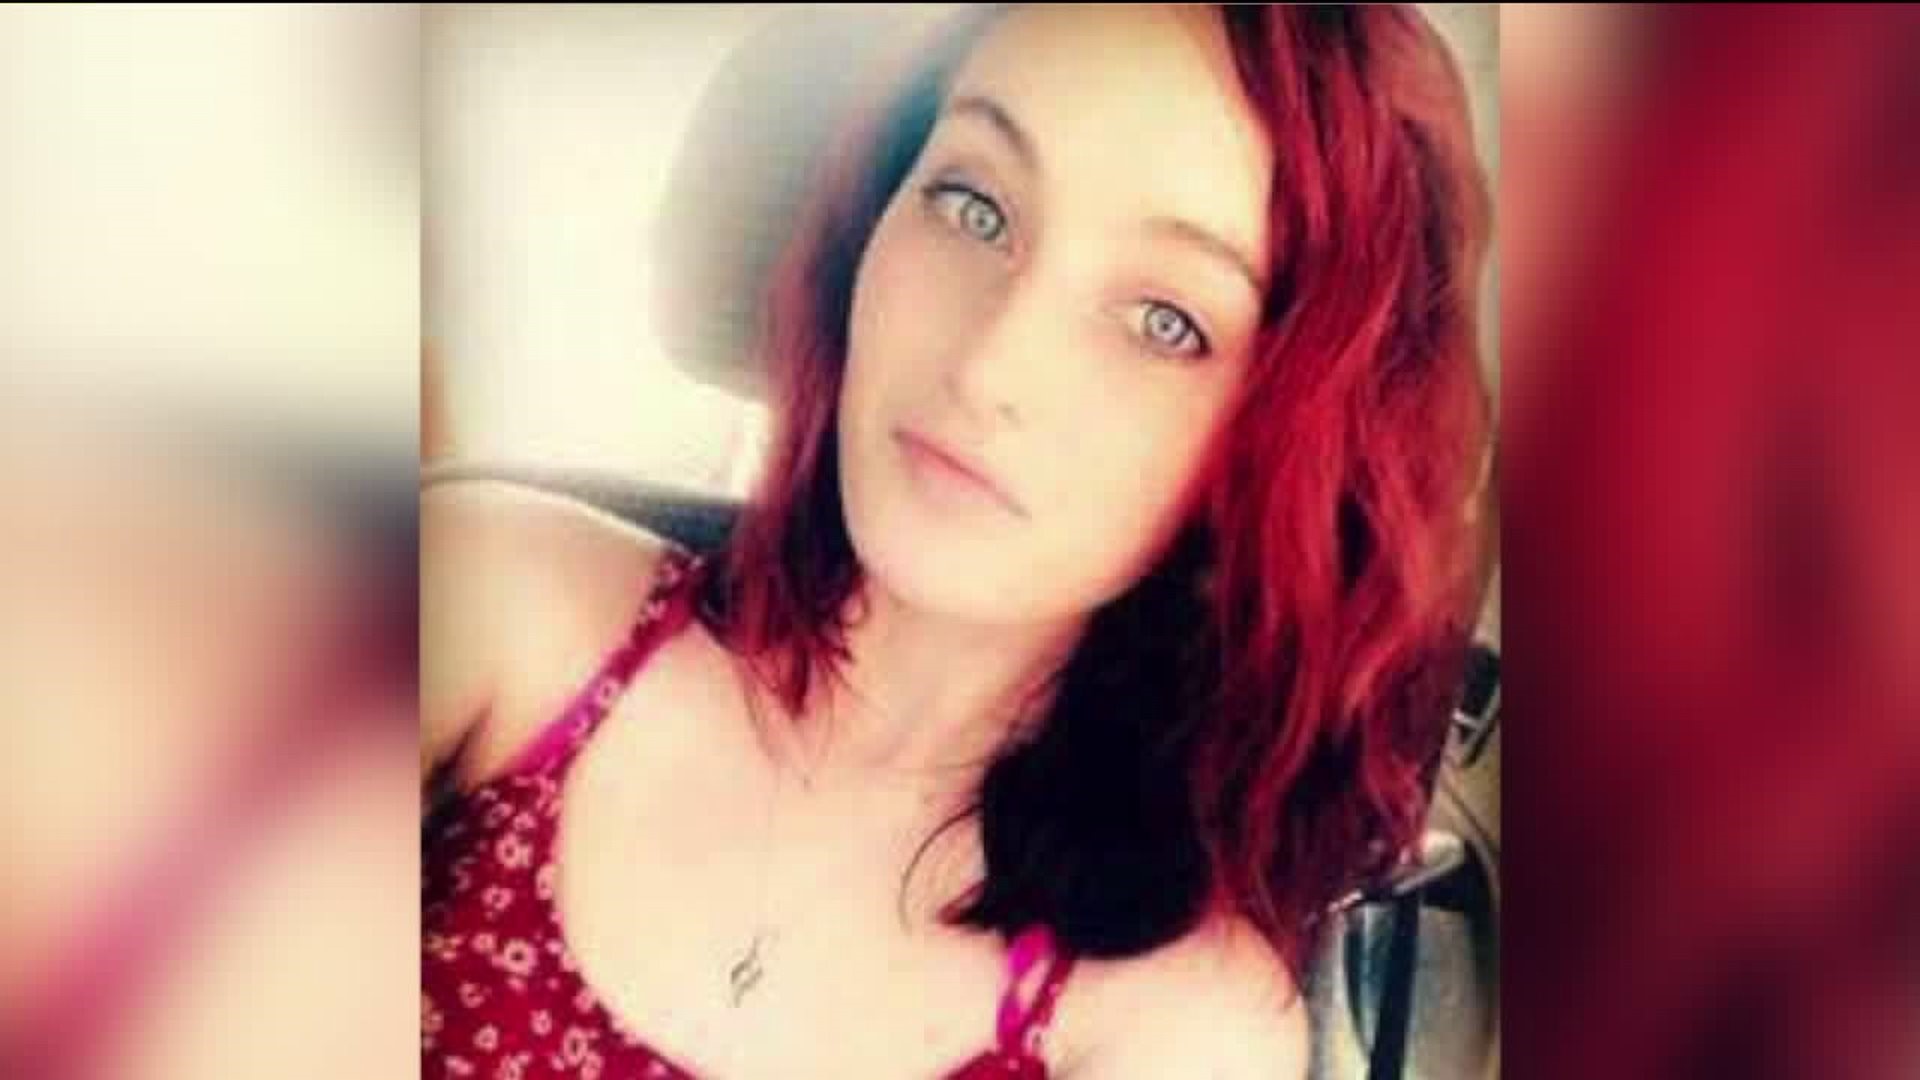 Body Found in Poconos Identified as Missing Woman from Philadelphia Area